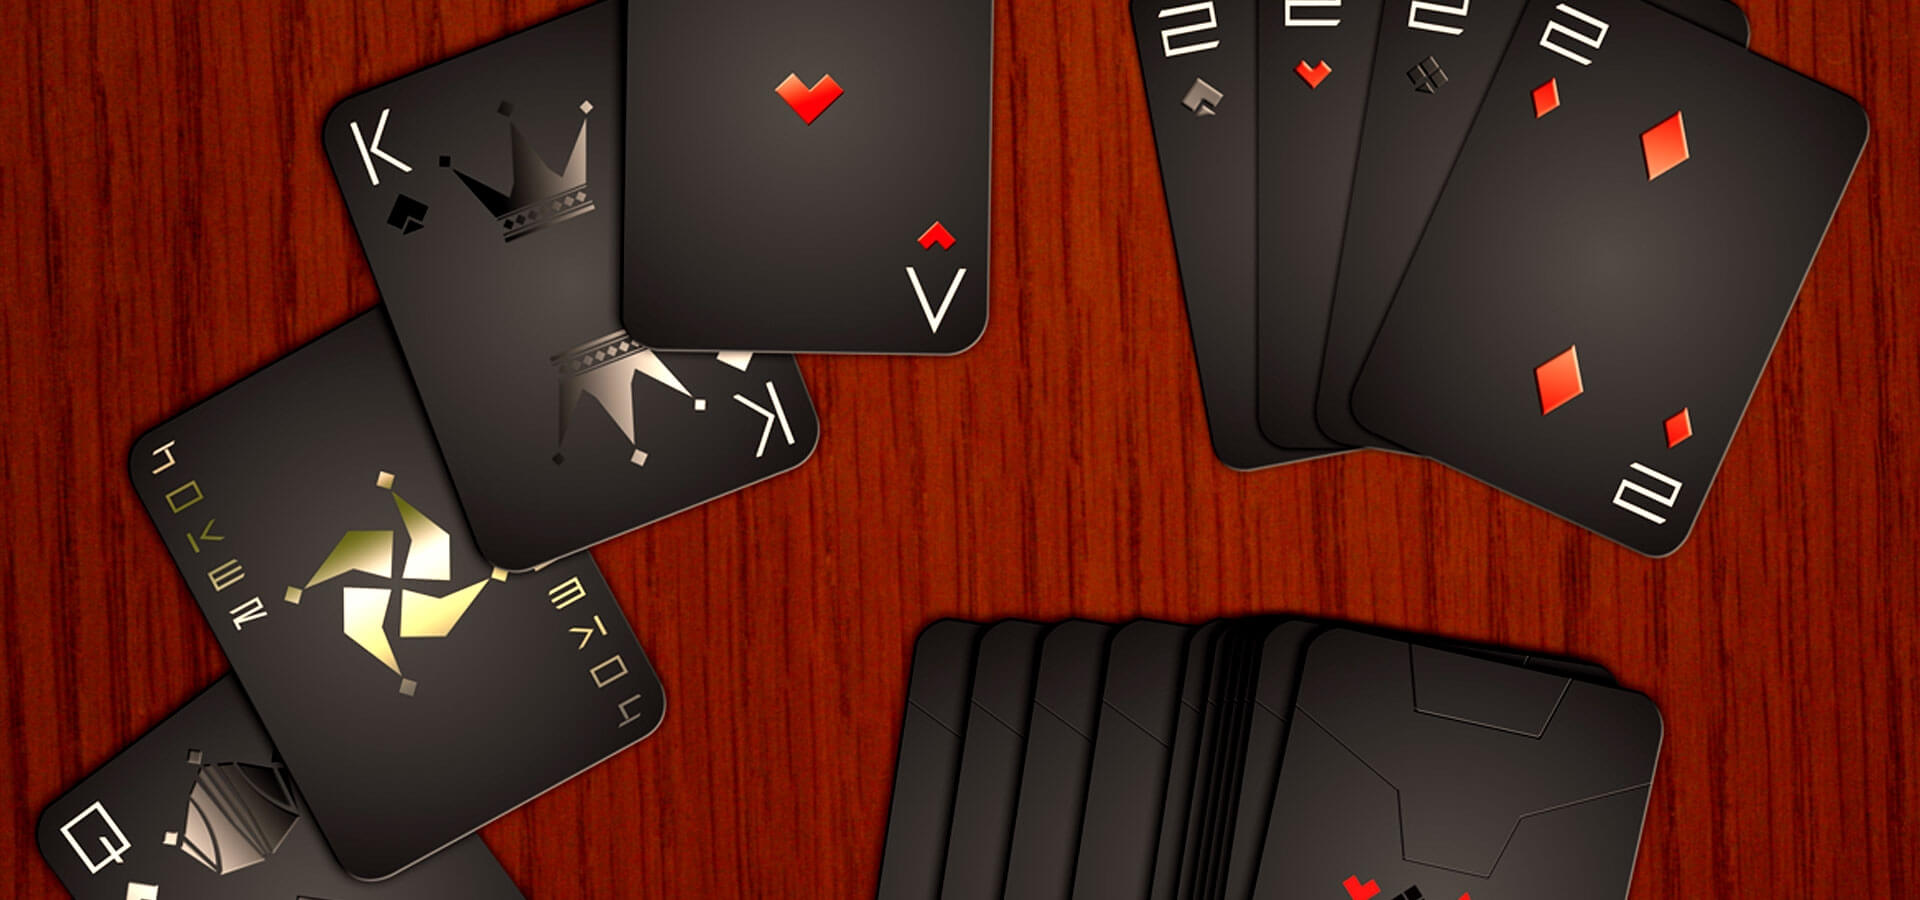 22+ Playing Card Designs | Free & Premium Templates Within Playing Card Design Template